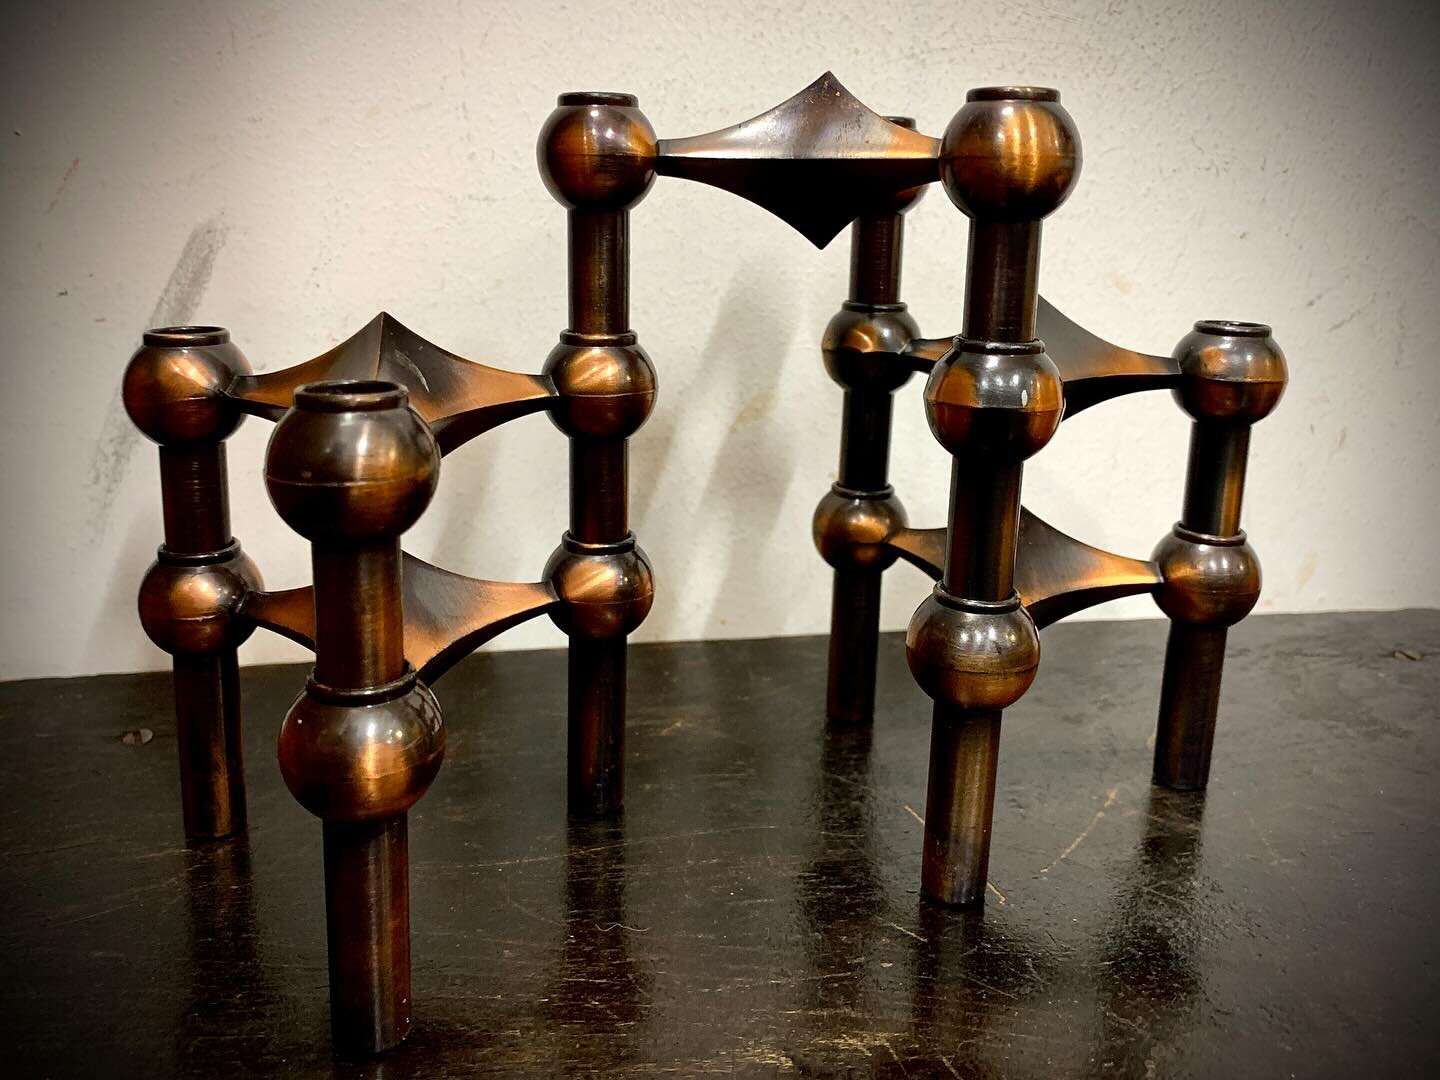 Set of 5 Nagel candlesticks. Unusual bronze finish. Available in shop @greenwichmarket
#nagelcandleholders 
#midcenturymodern 
#midcenturyhome 
#midcenturydesign 
#scandinaviandesign 
 #interiordesign 
#style
#interiors